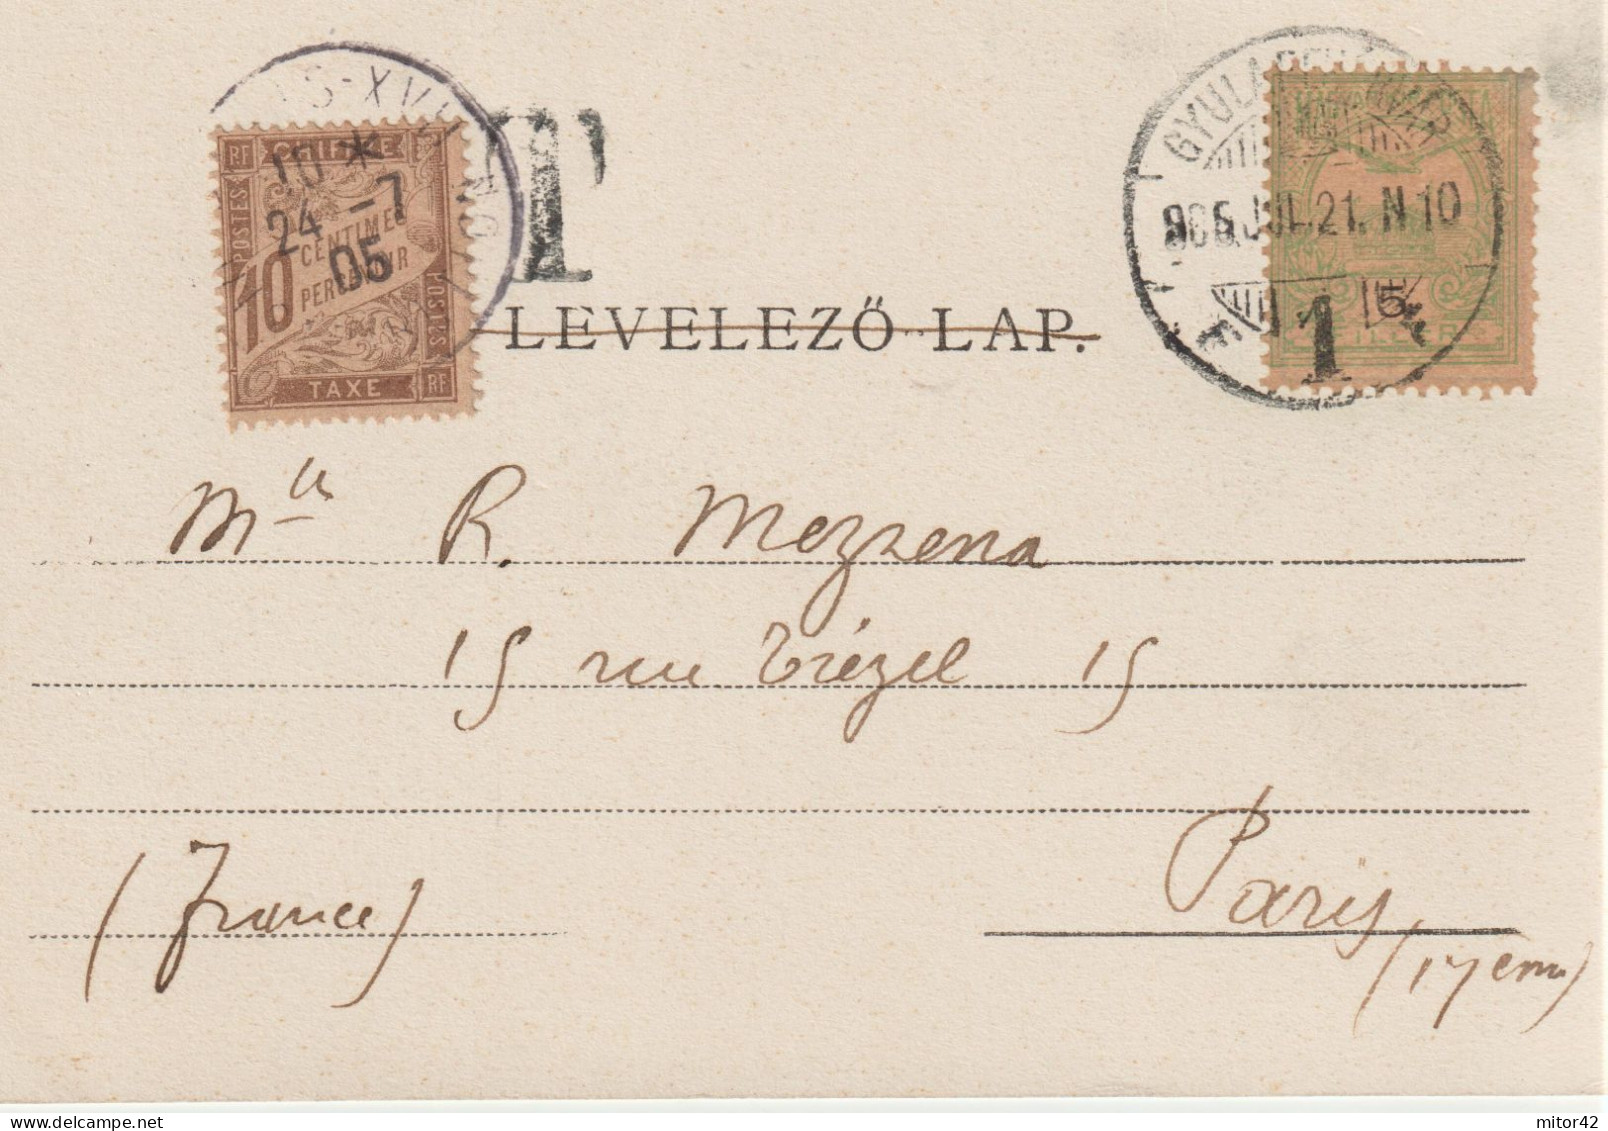 2*-Tassate-Segnatasse-Tassata Da Estero: Ungheria X Francia-Cartolina Di Gyulafehervar (Karsburg)-1921 - Postage Due